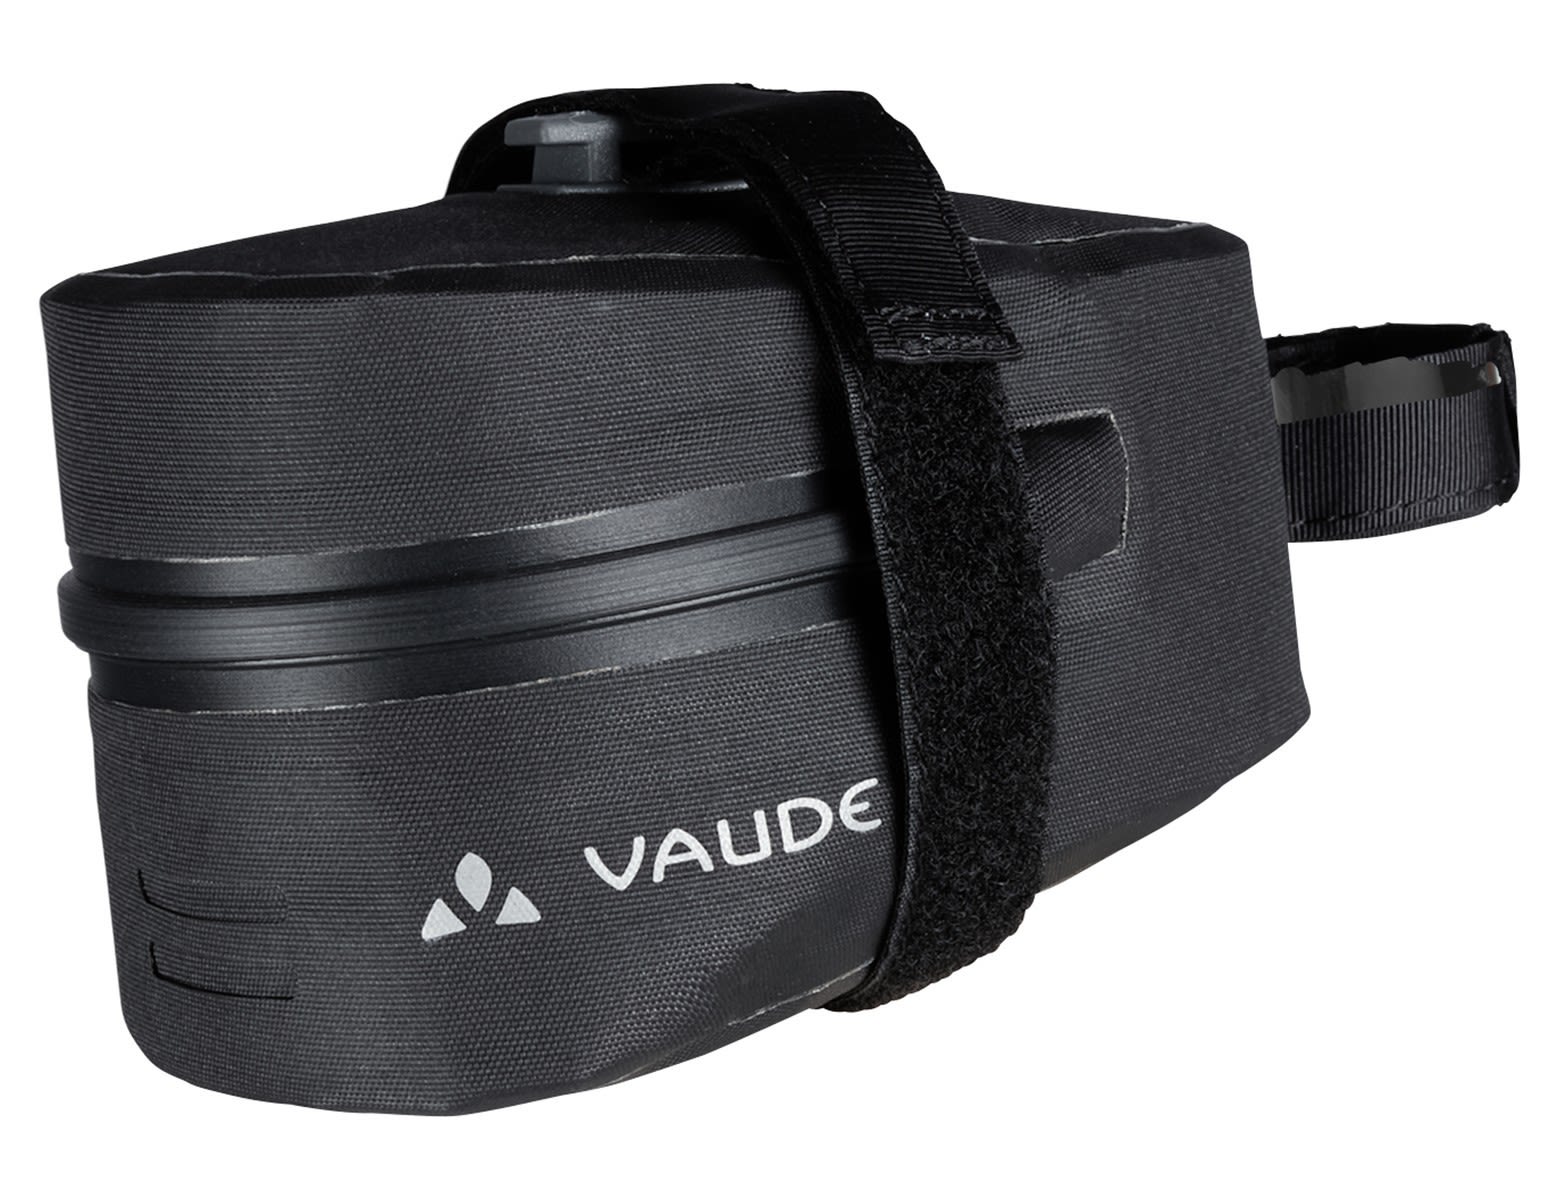 Vaude Tool Aqua Schwarz- Taschen- Grsse One Size - Farbe Black